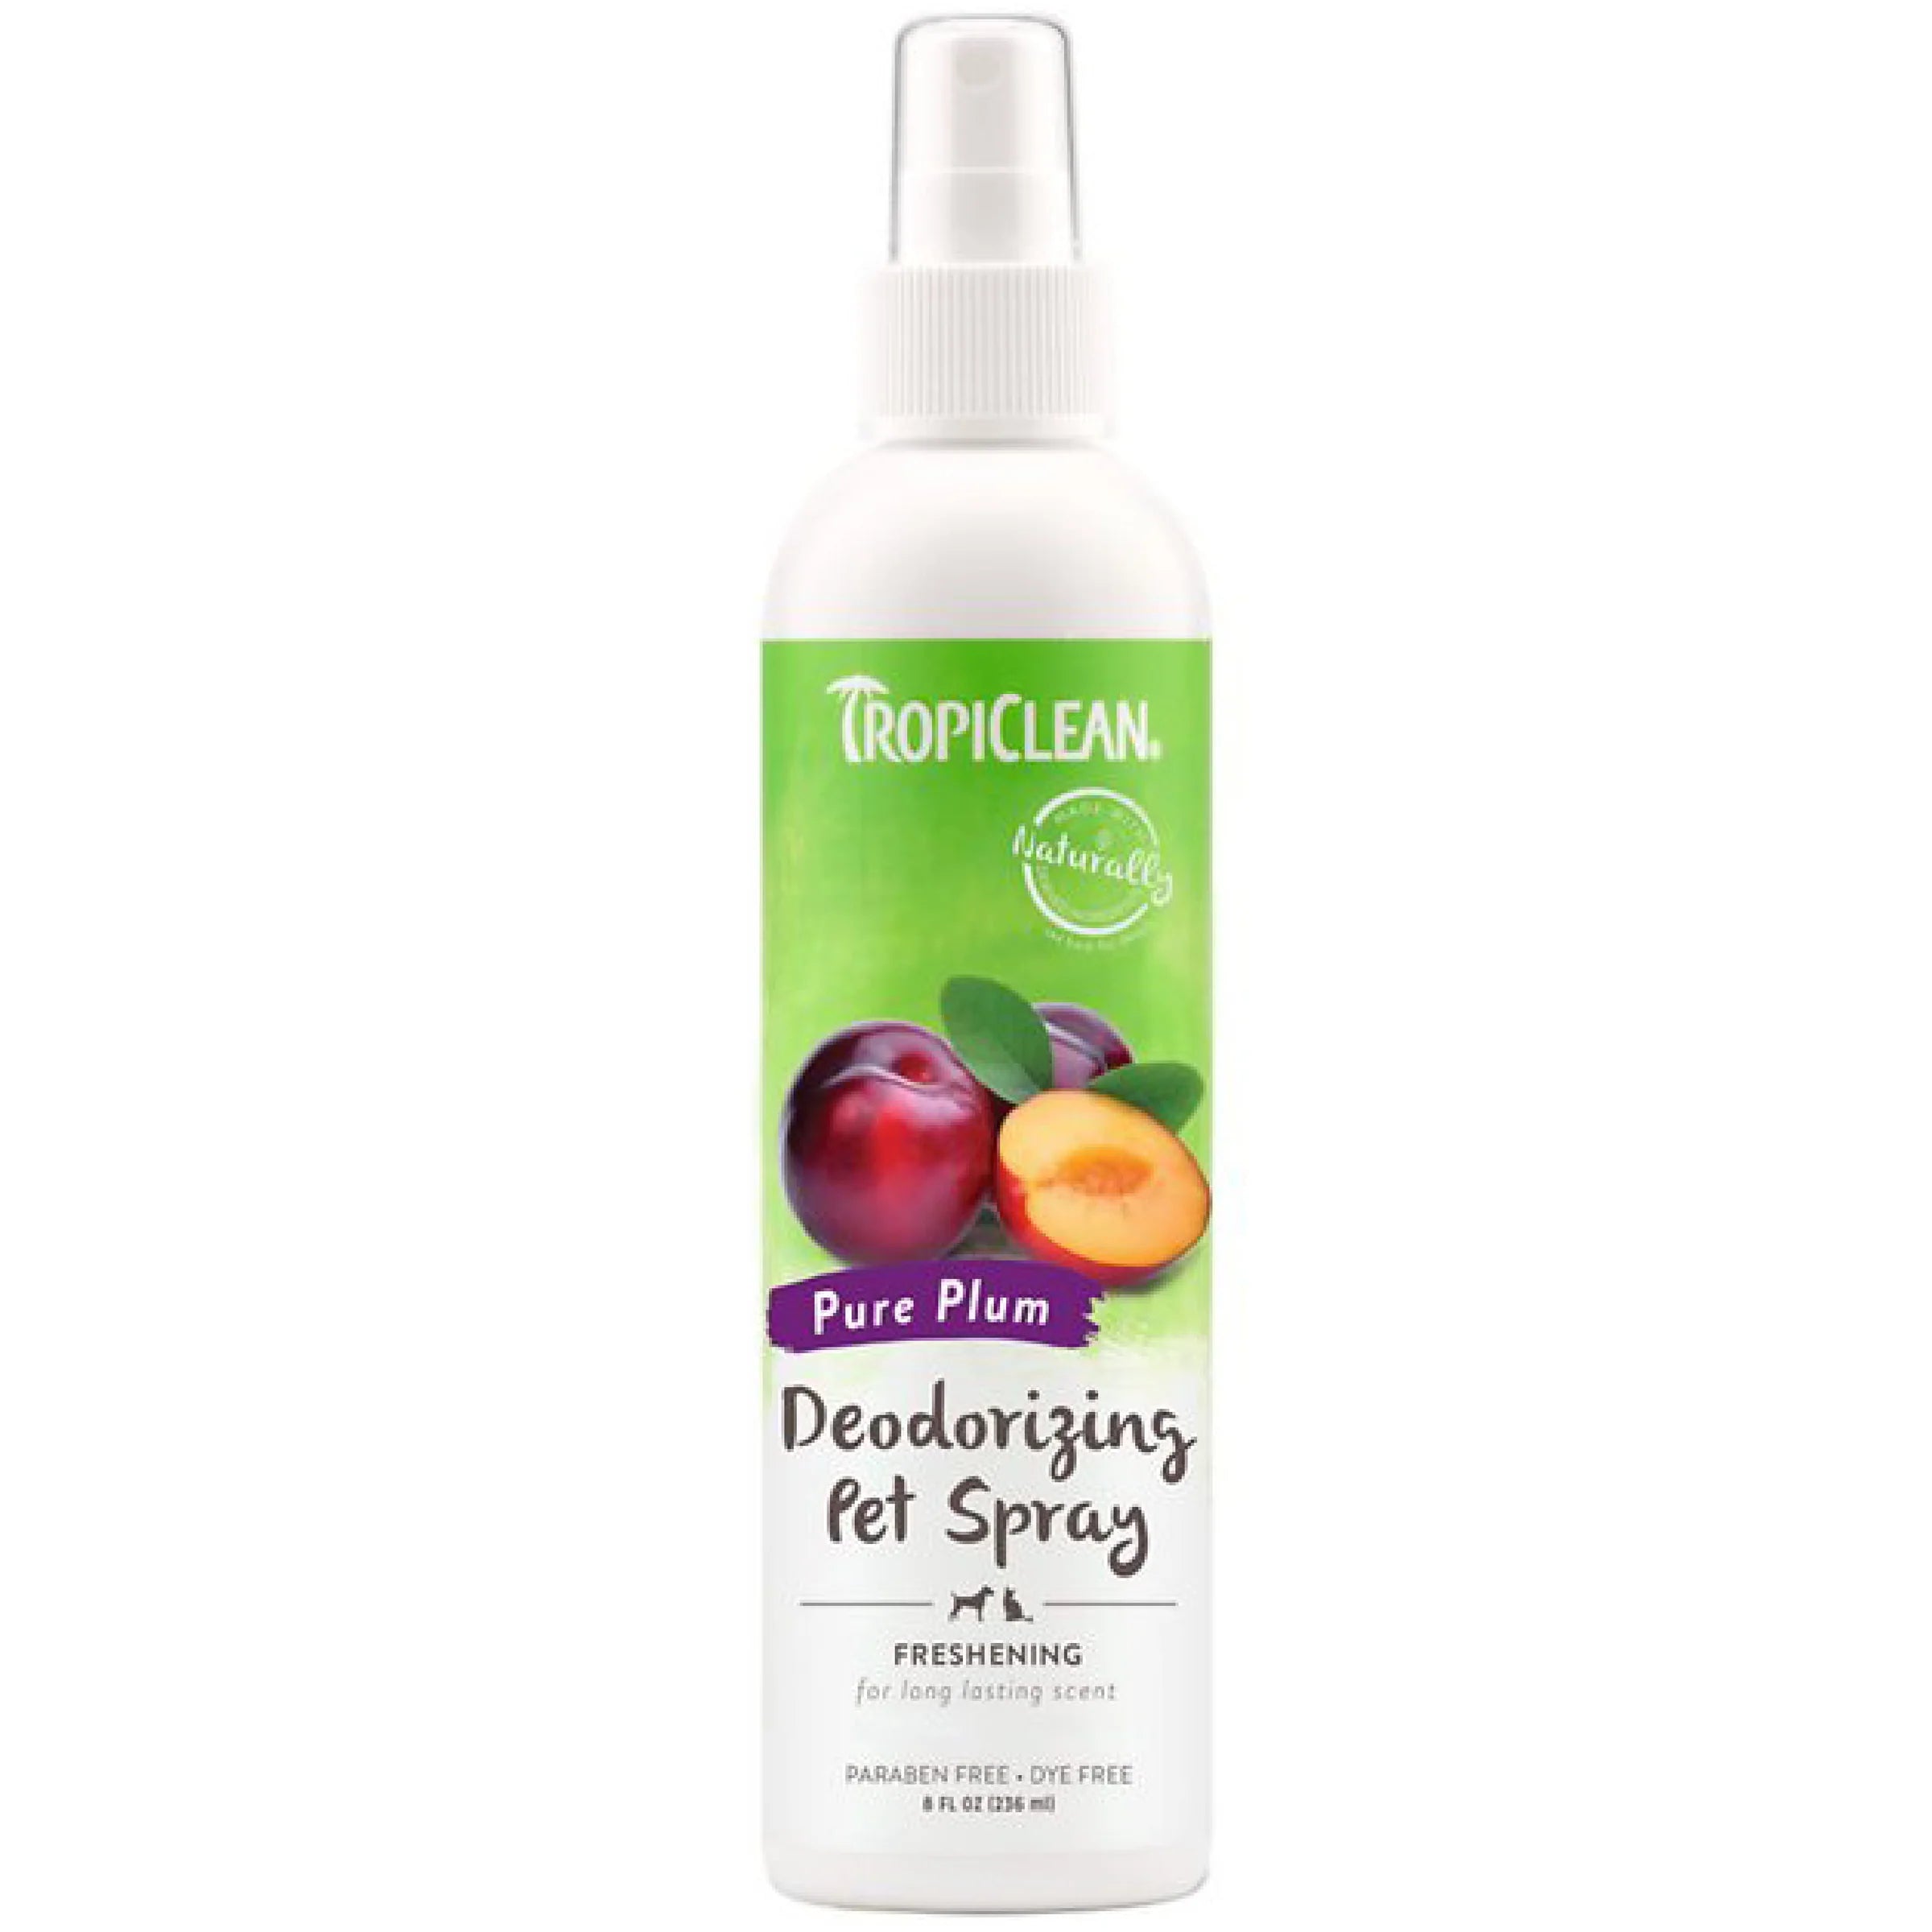 Tropiclean Pure Plum Deodorizing Pet Spray